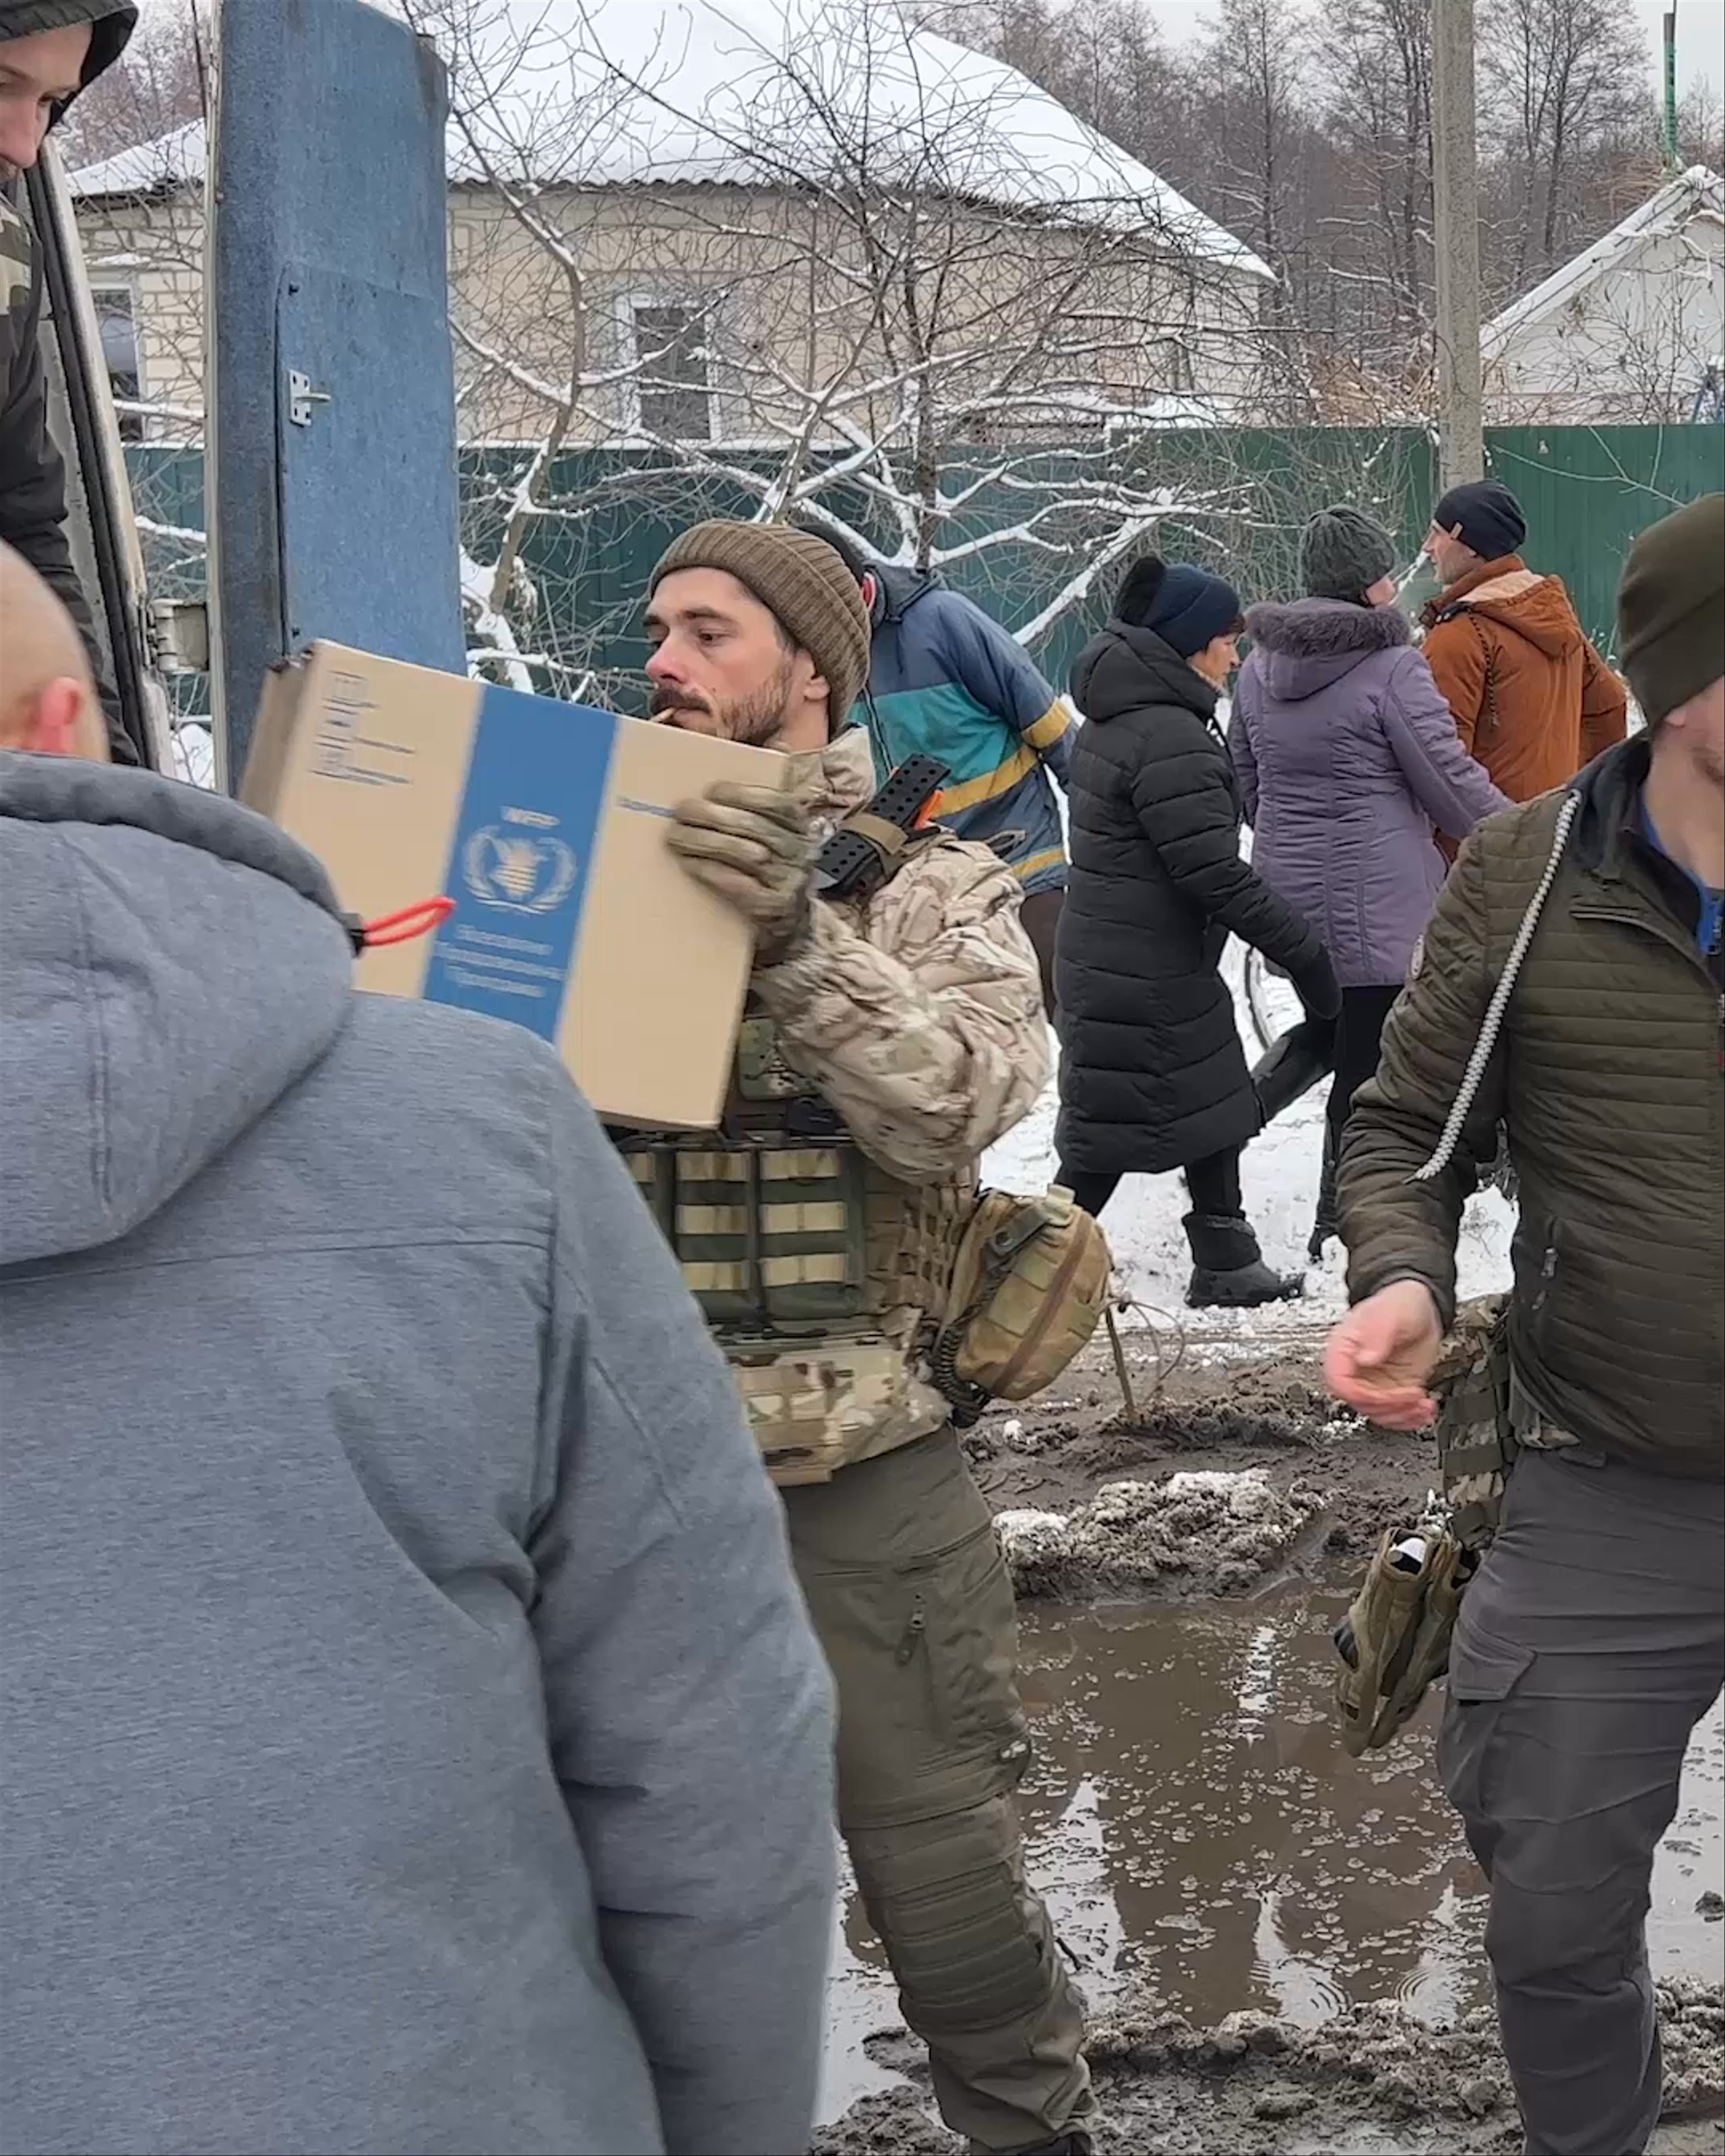 Video of men passing boxes of food rations between trucks